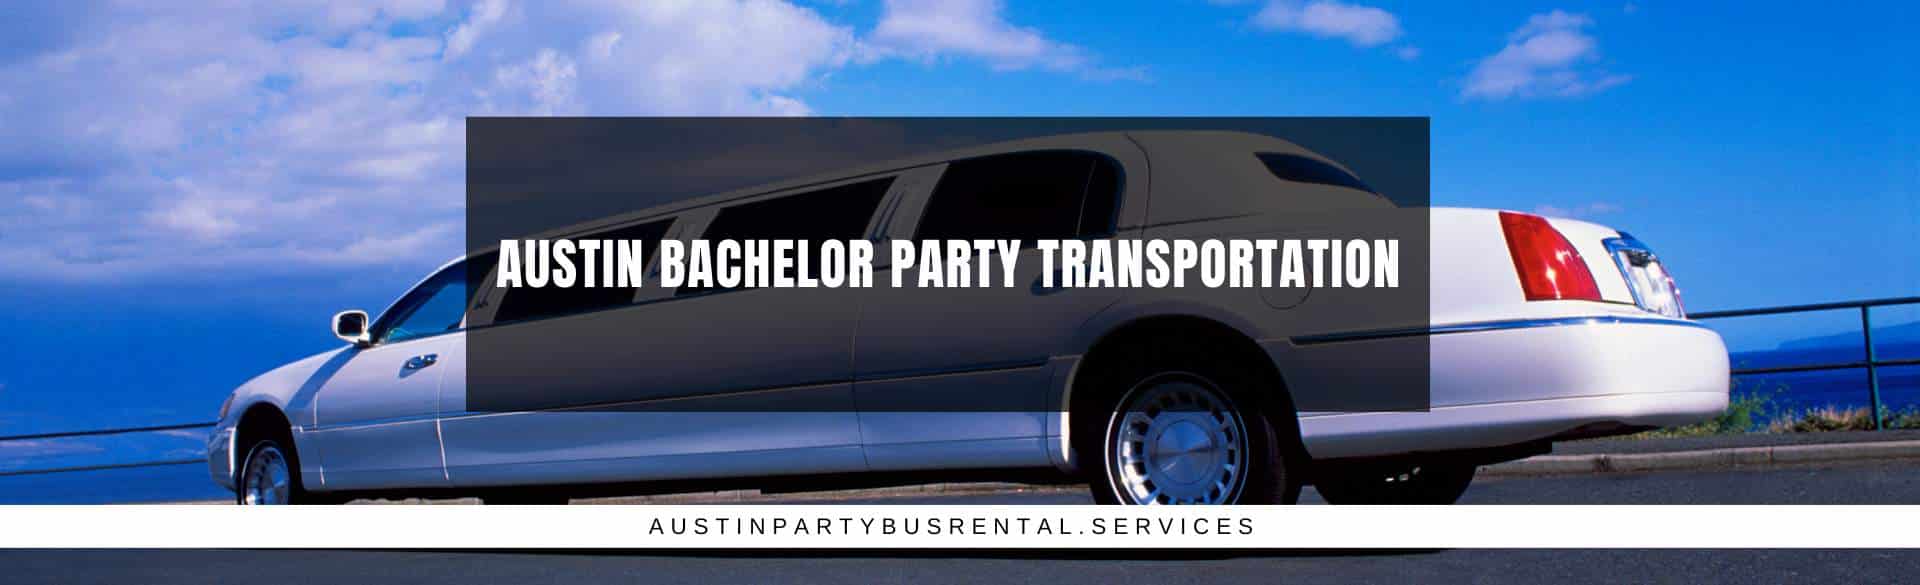 Austin Bachelor Party Transportationn